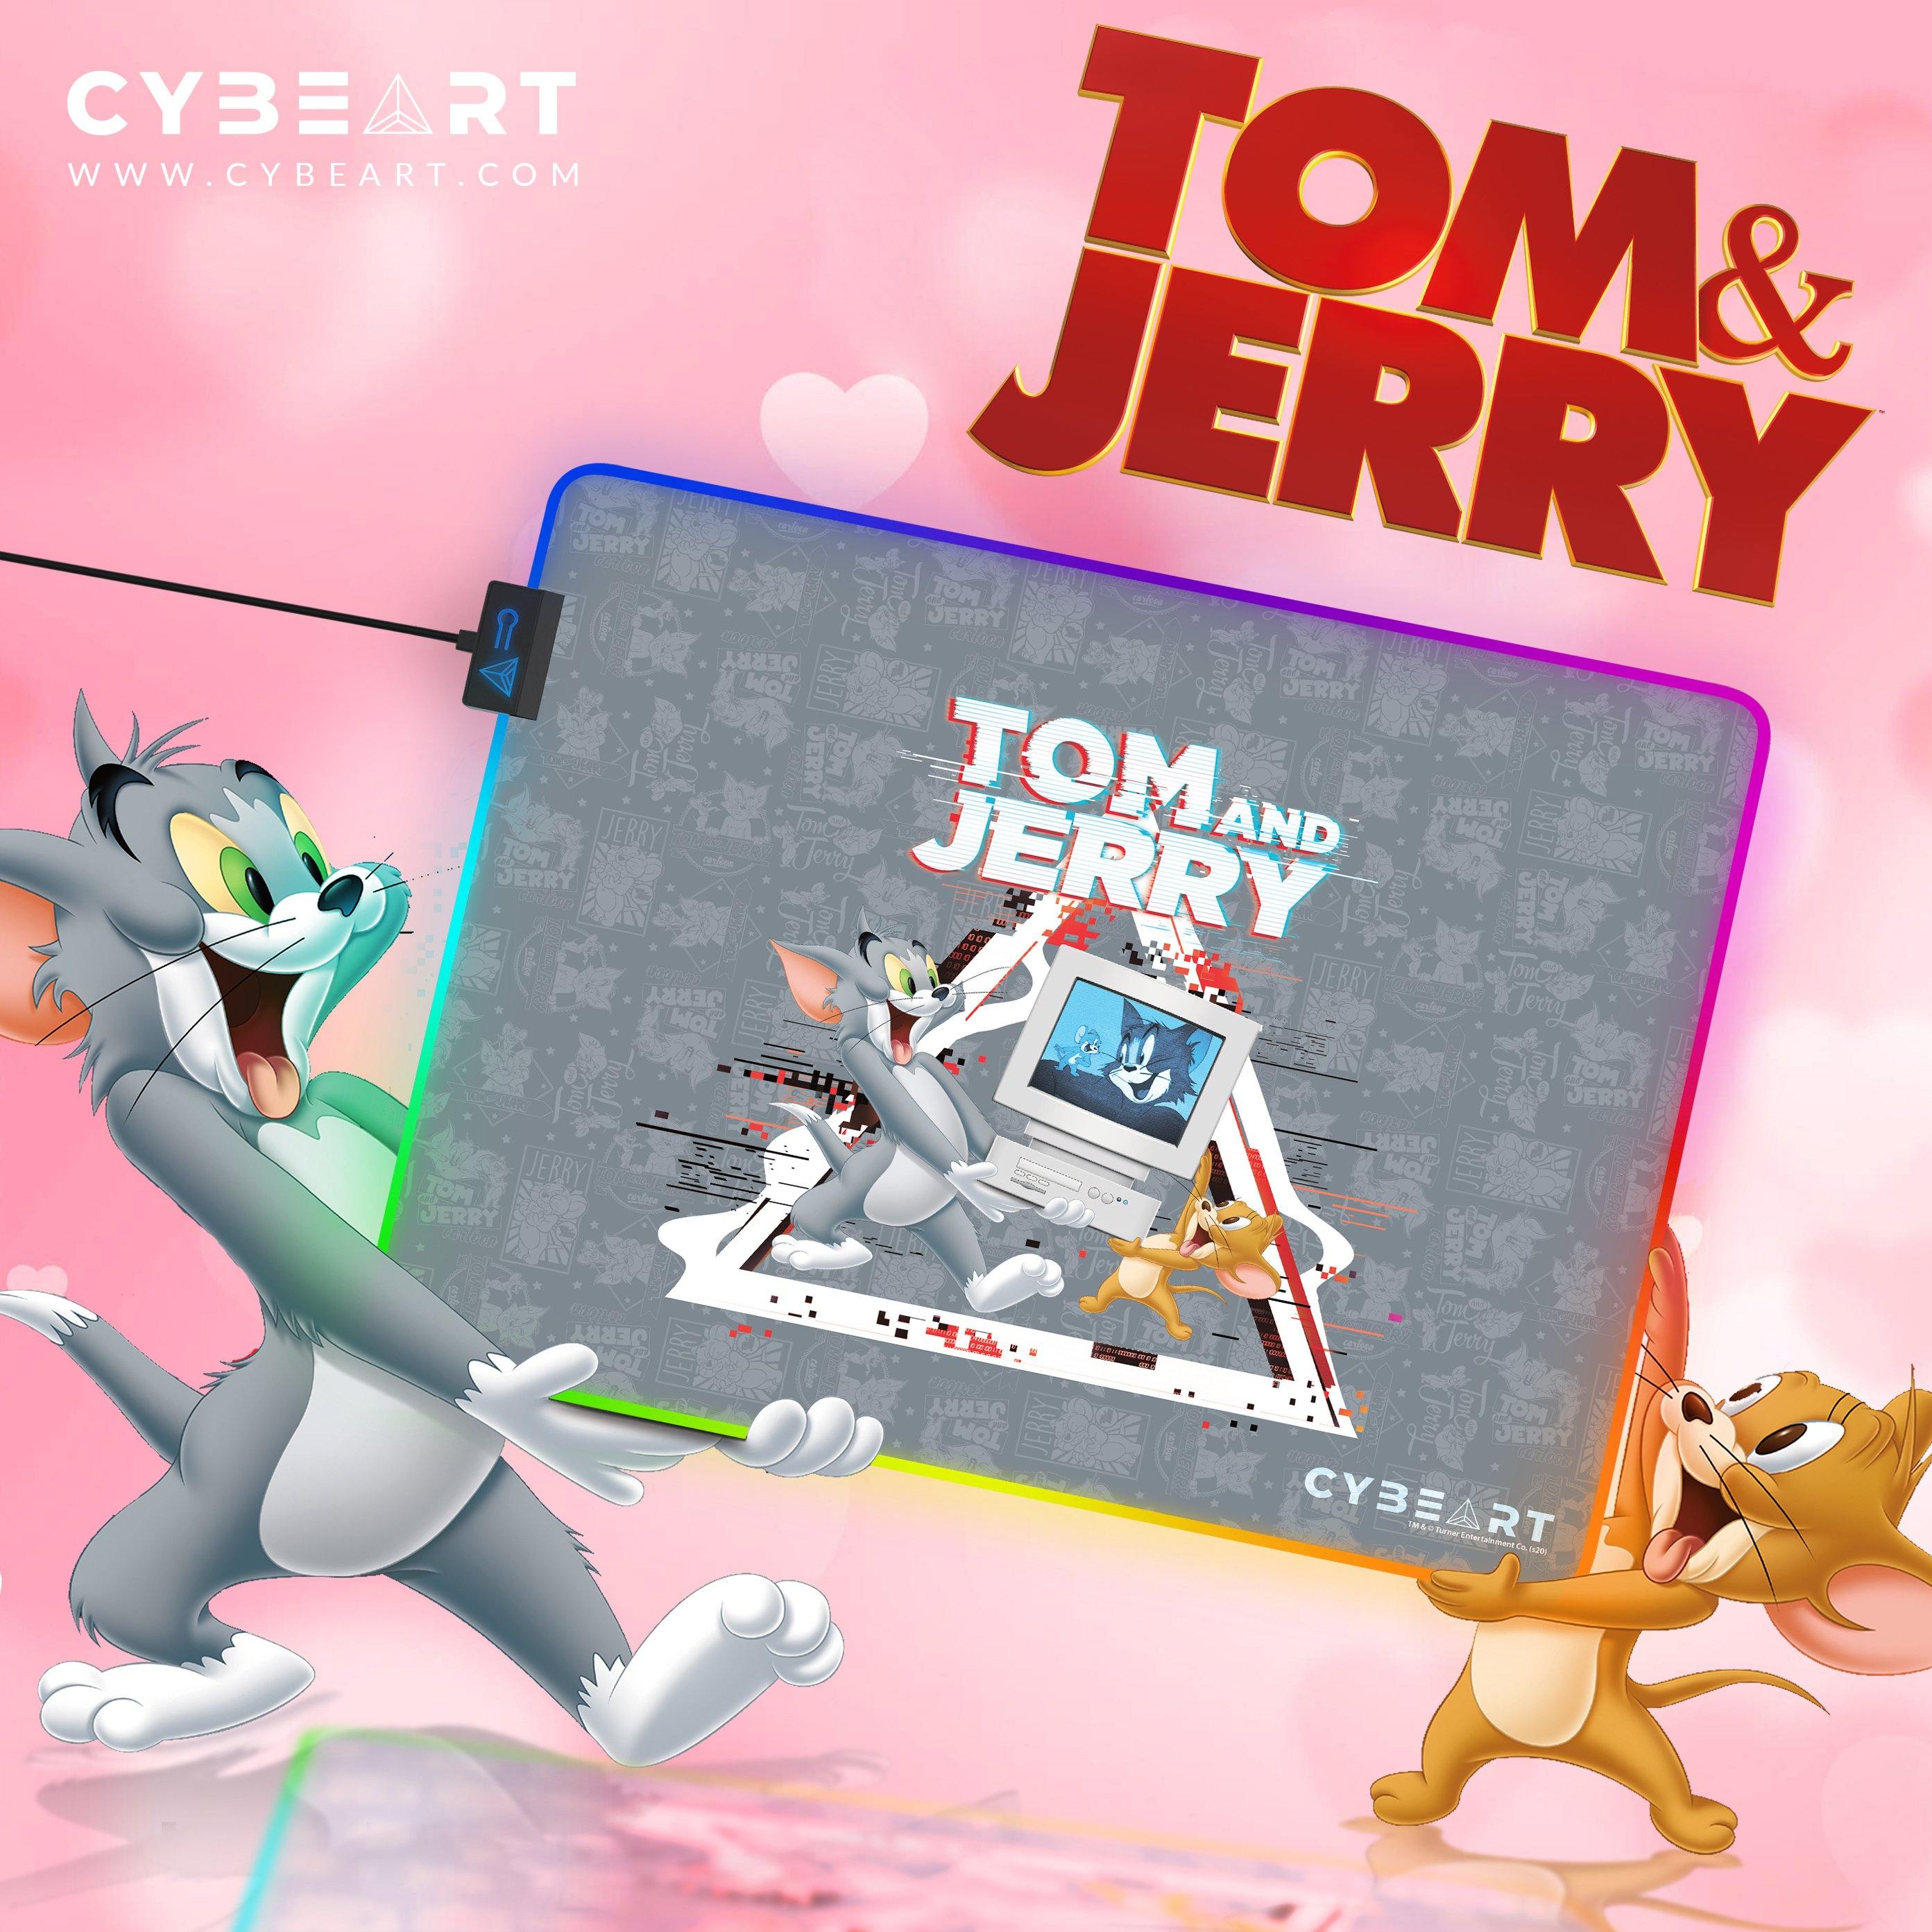 Tom and Jerry 2021 Movie with CYBEART – Cybeart